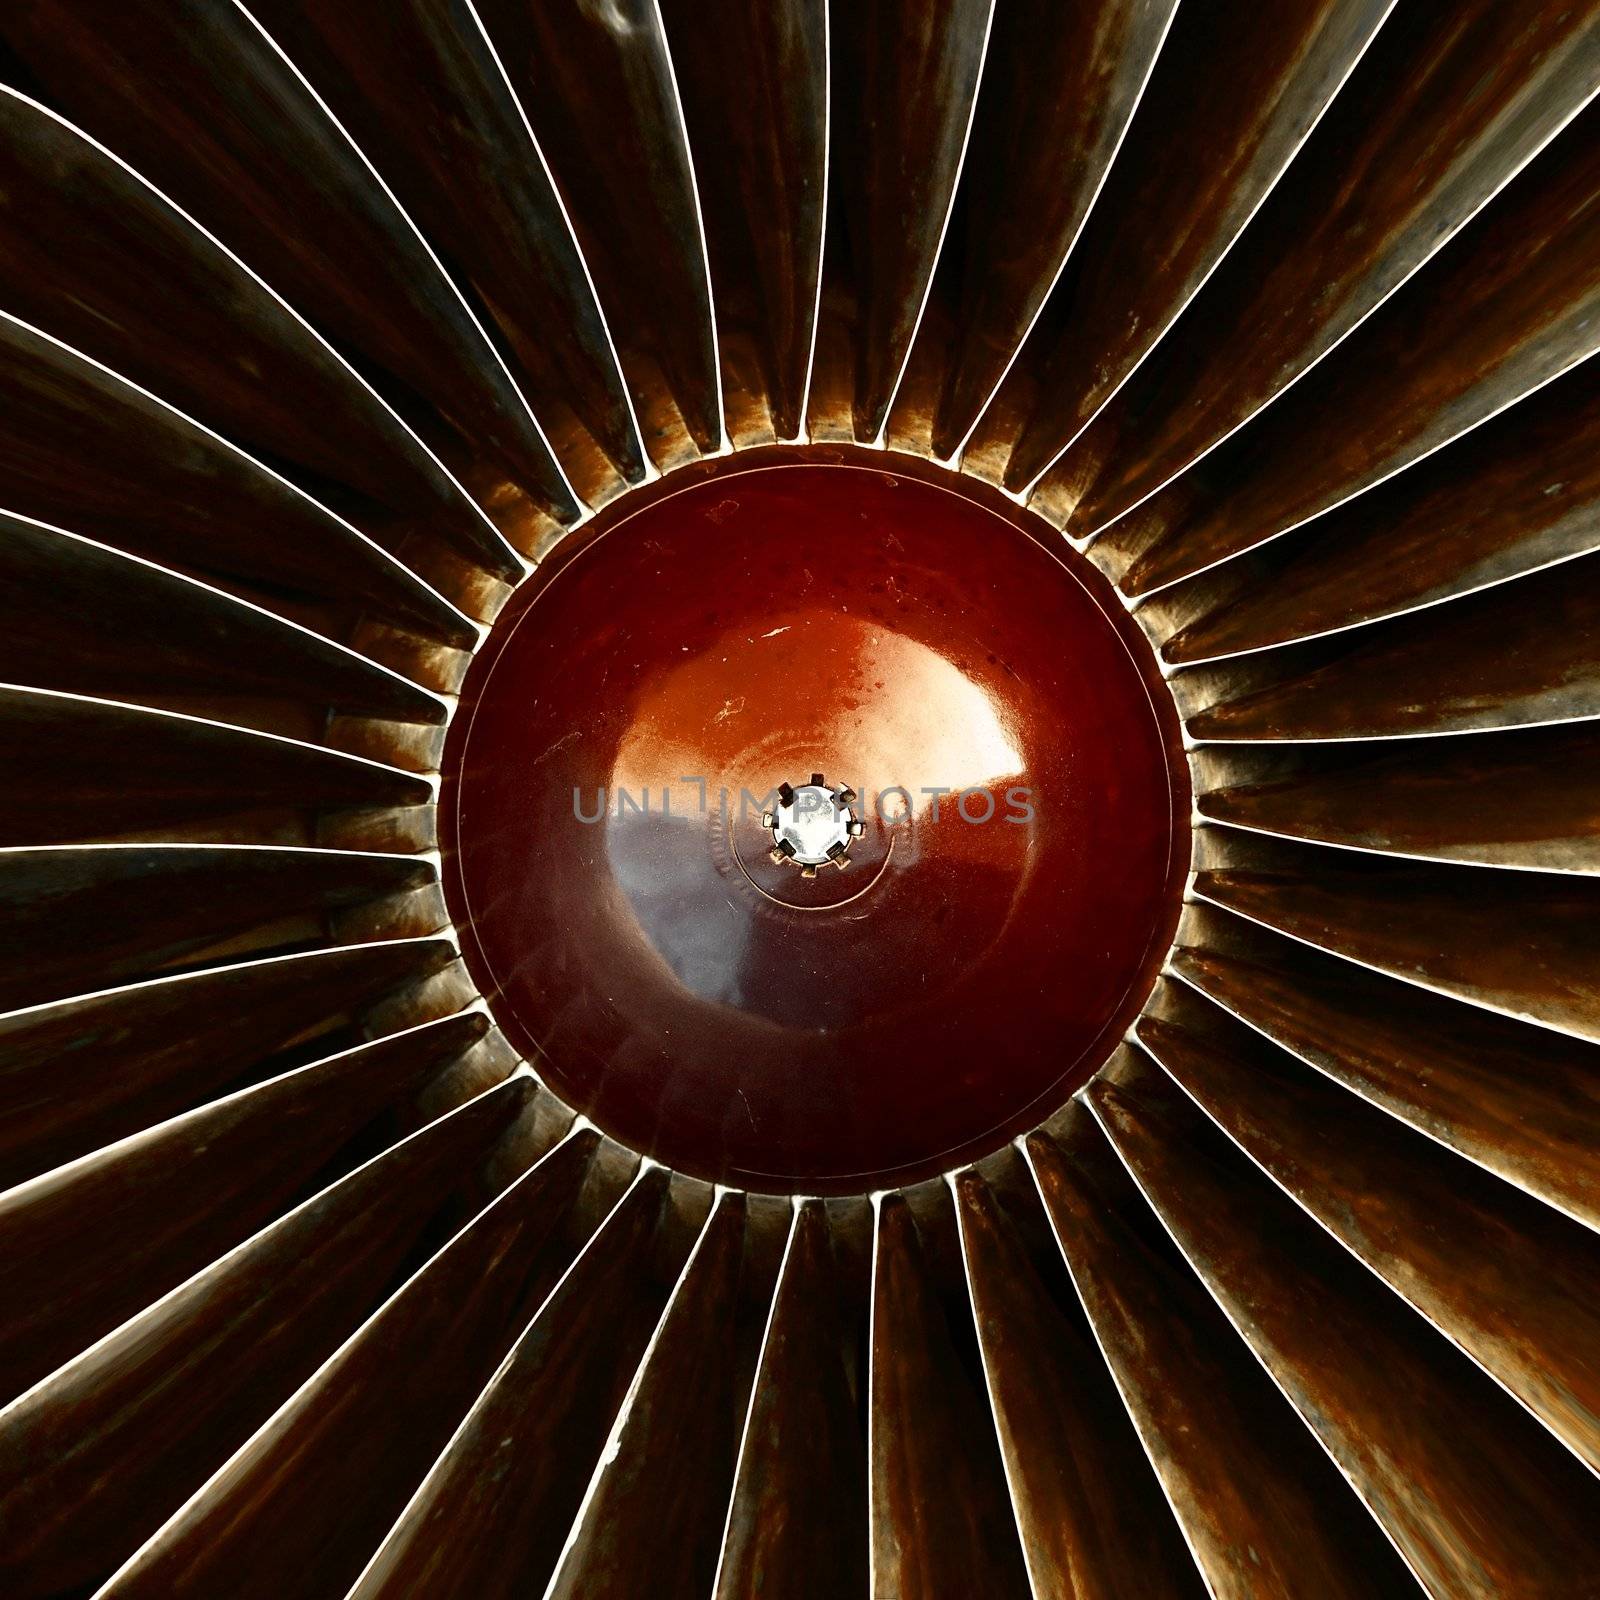 Jet engine turbine detail